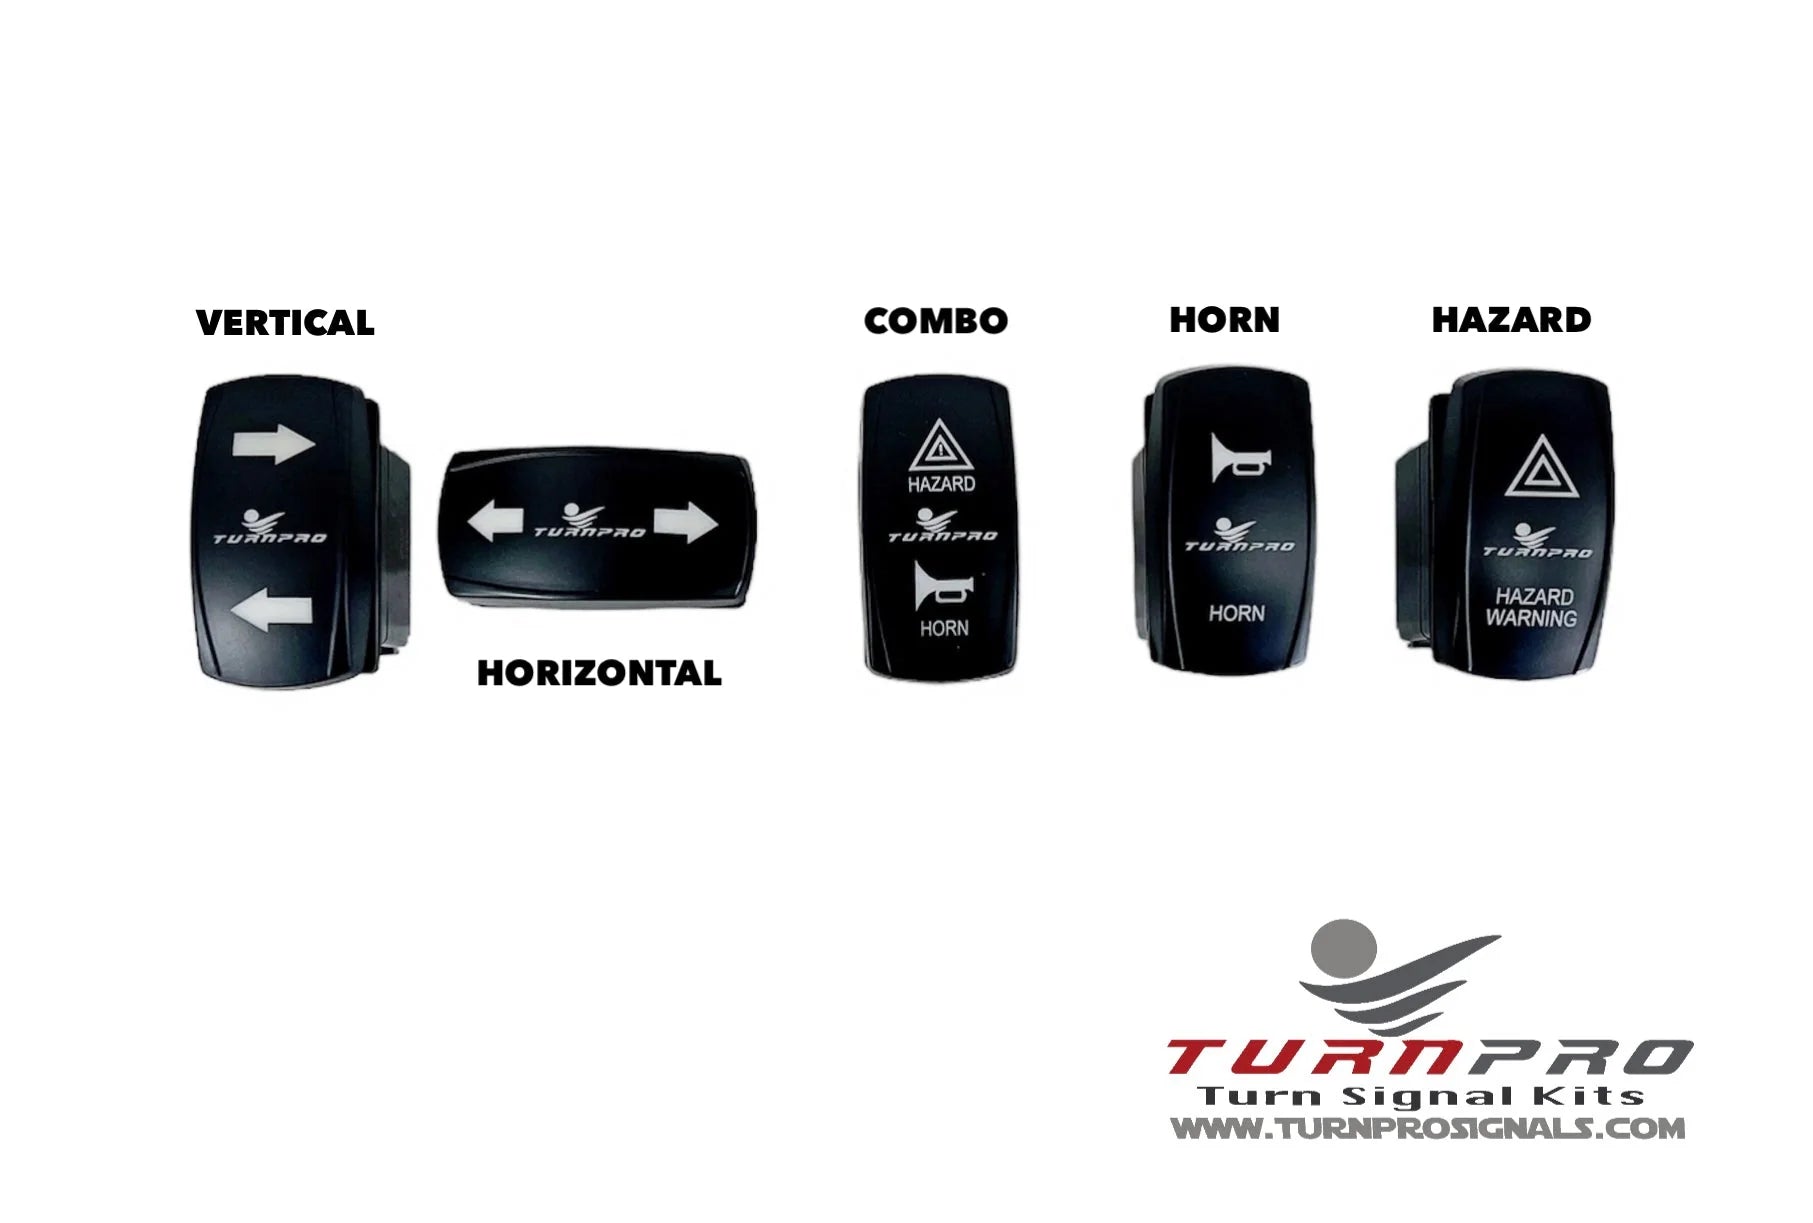 2022-24 Honda Talon Models Fang LED Plug & Play Signal System